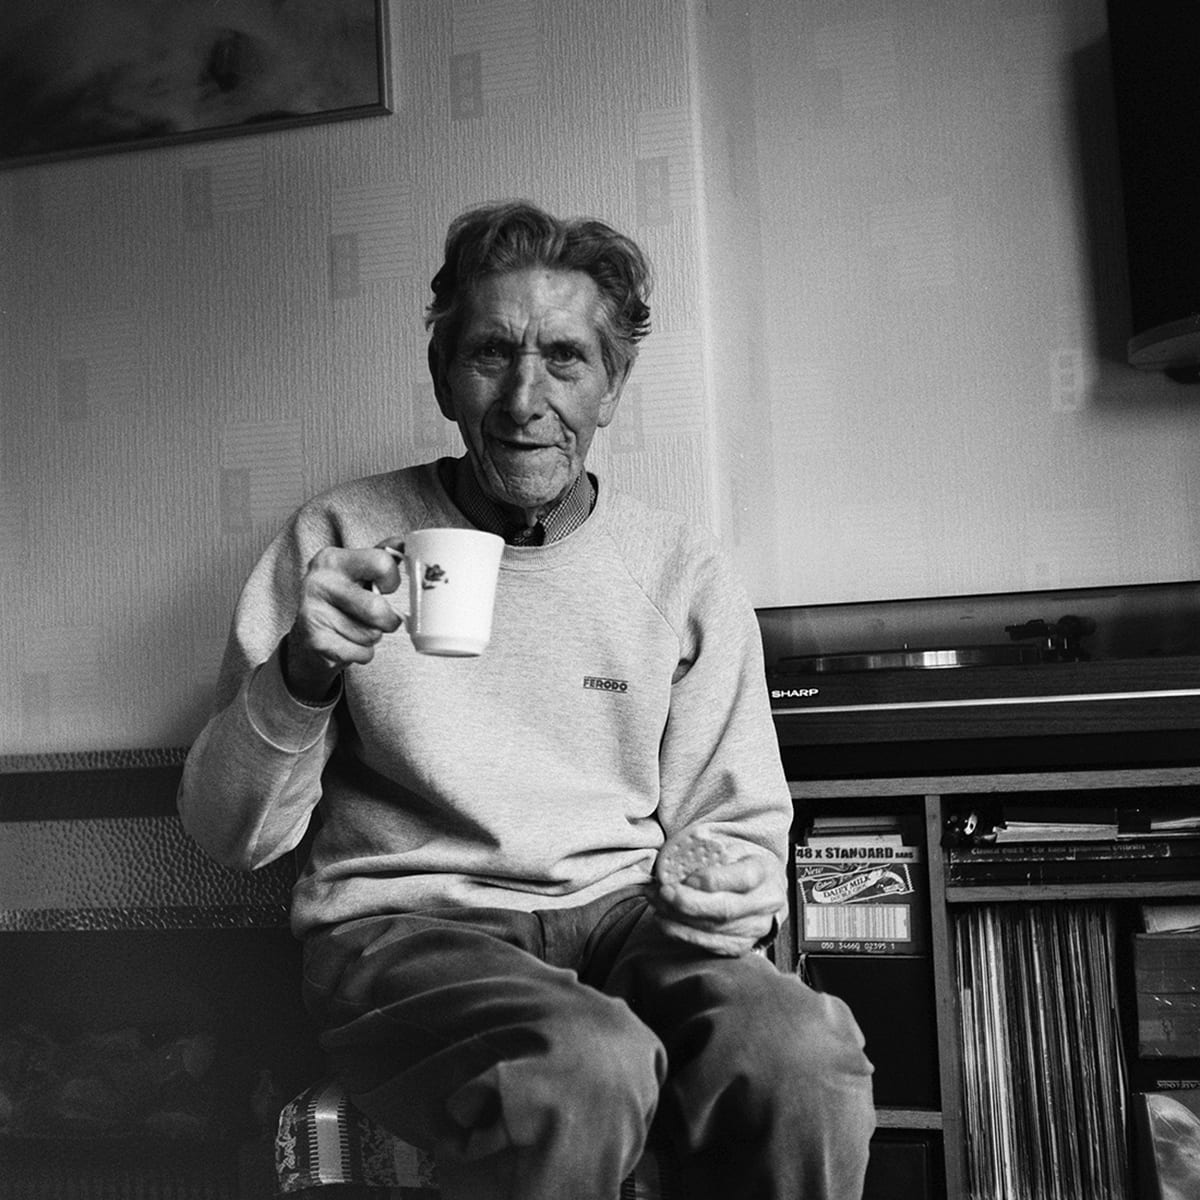 Black and white photograph of man holding a mug.